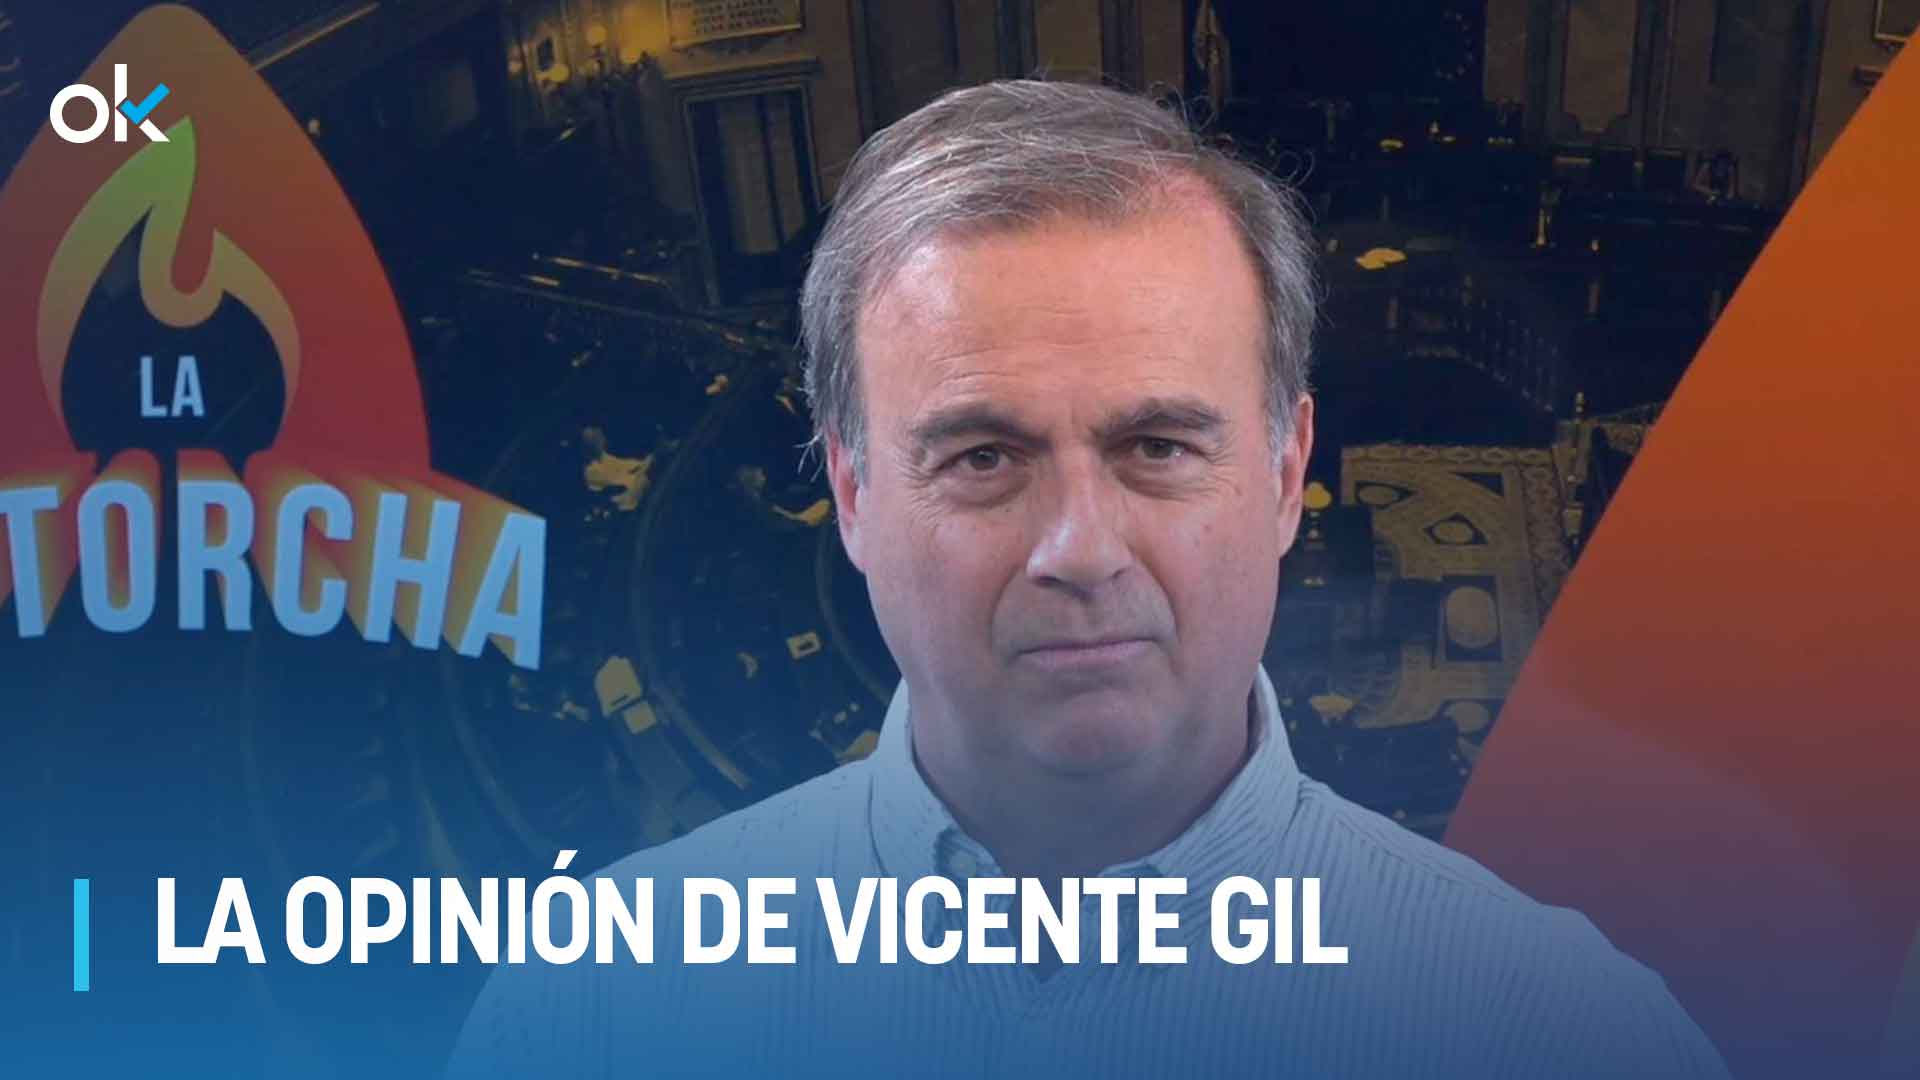 Vicente Gil